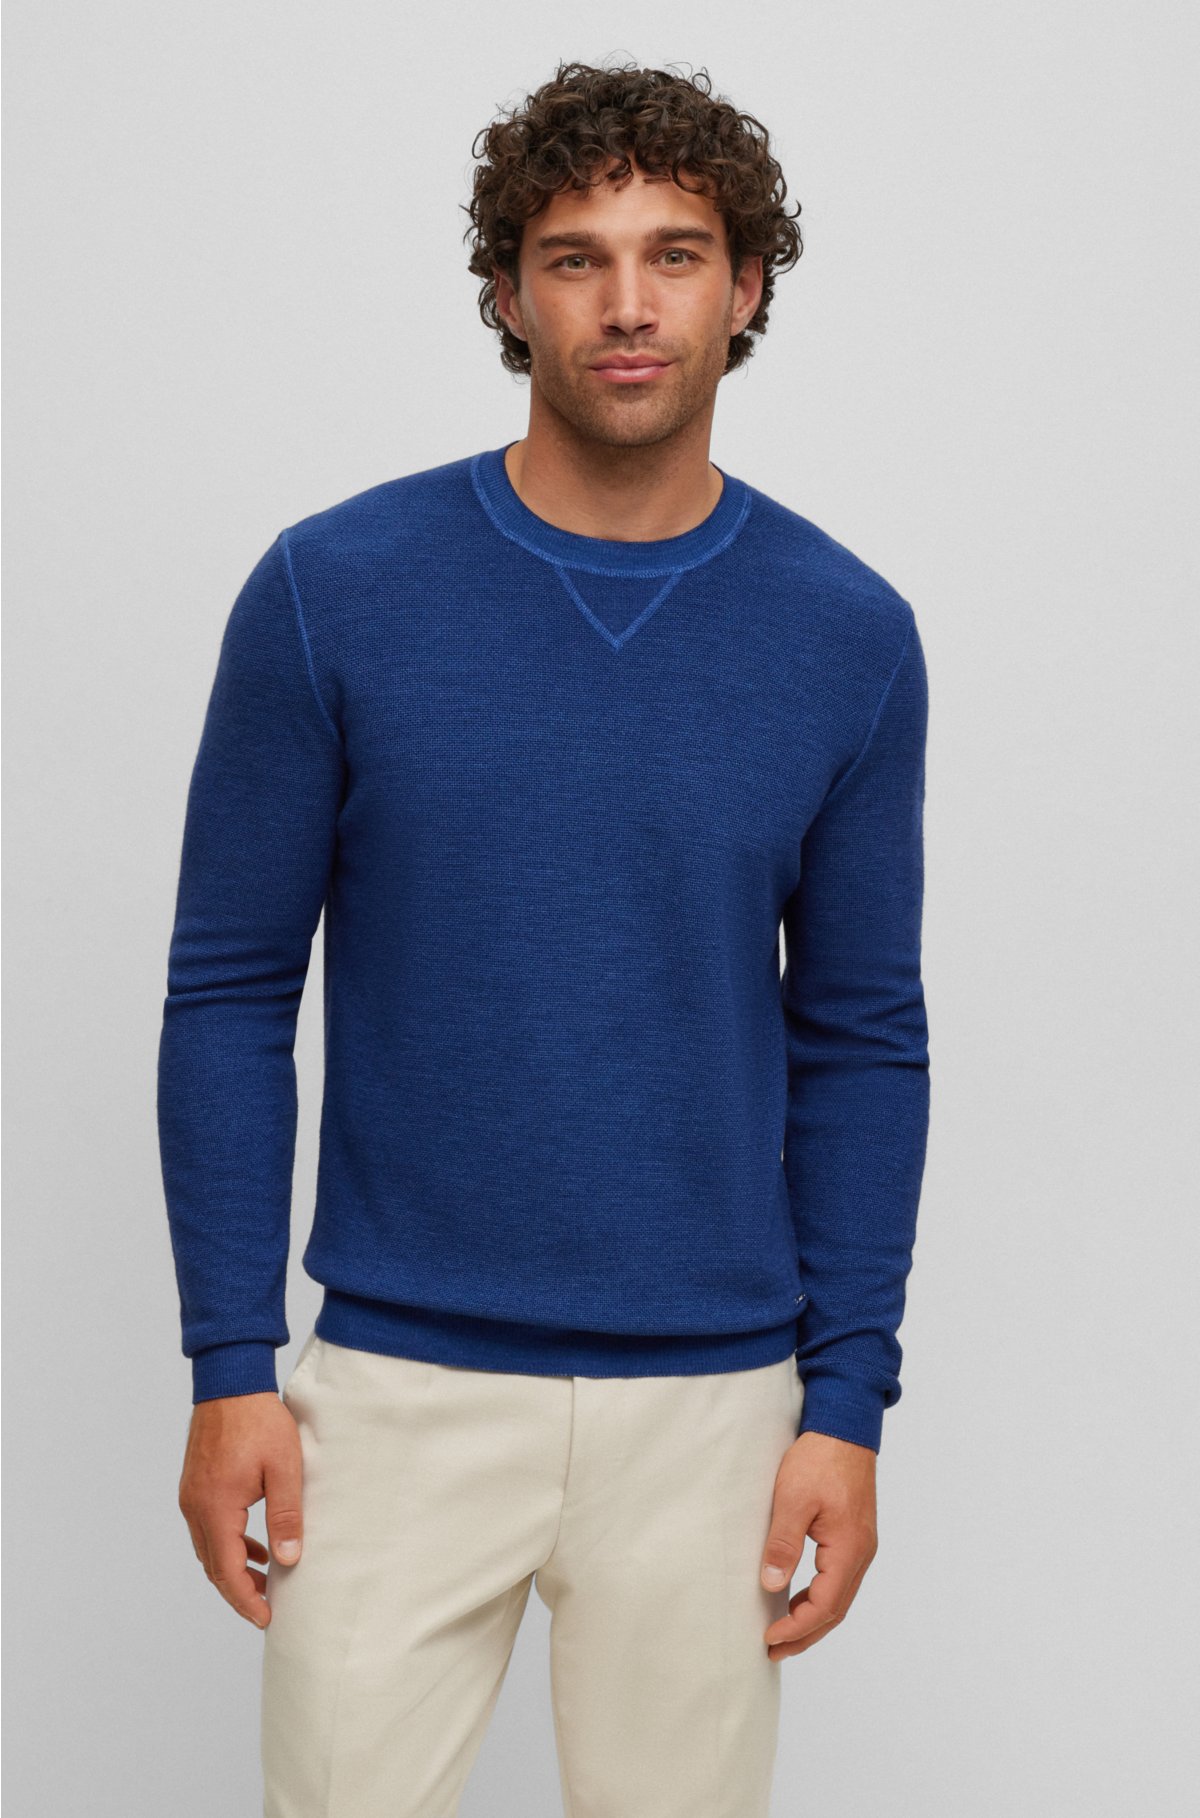 Structured-knit sweater in virgin wool, silk and cashmere, Dark Blue